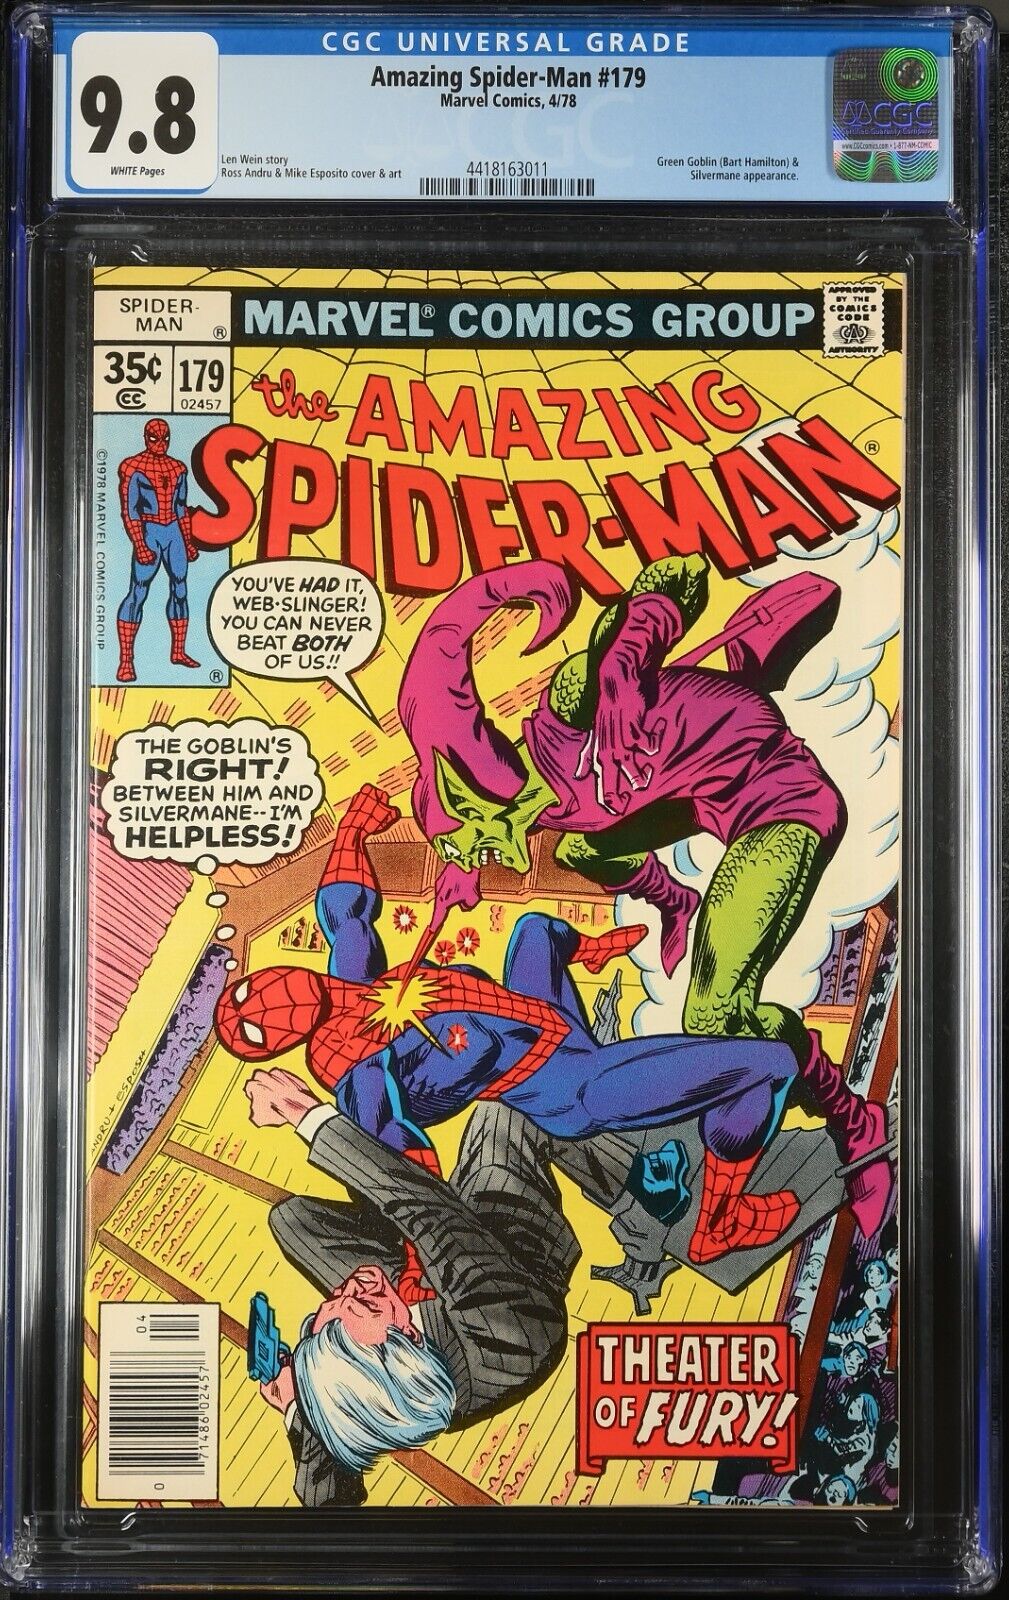 Amazing Spider-Man #179 CGC 9.8 WHITE PASGES - Marvel Comics 1978 - Green Goblin